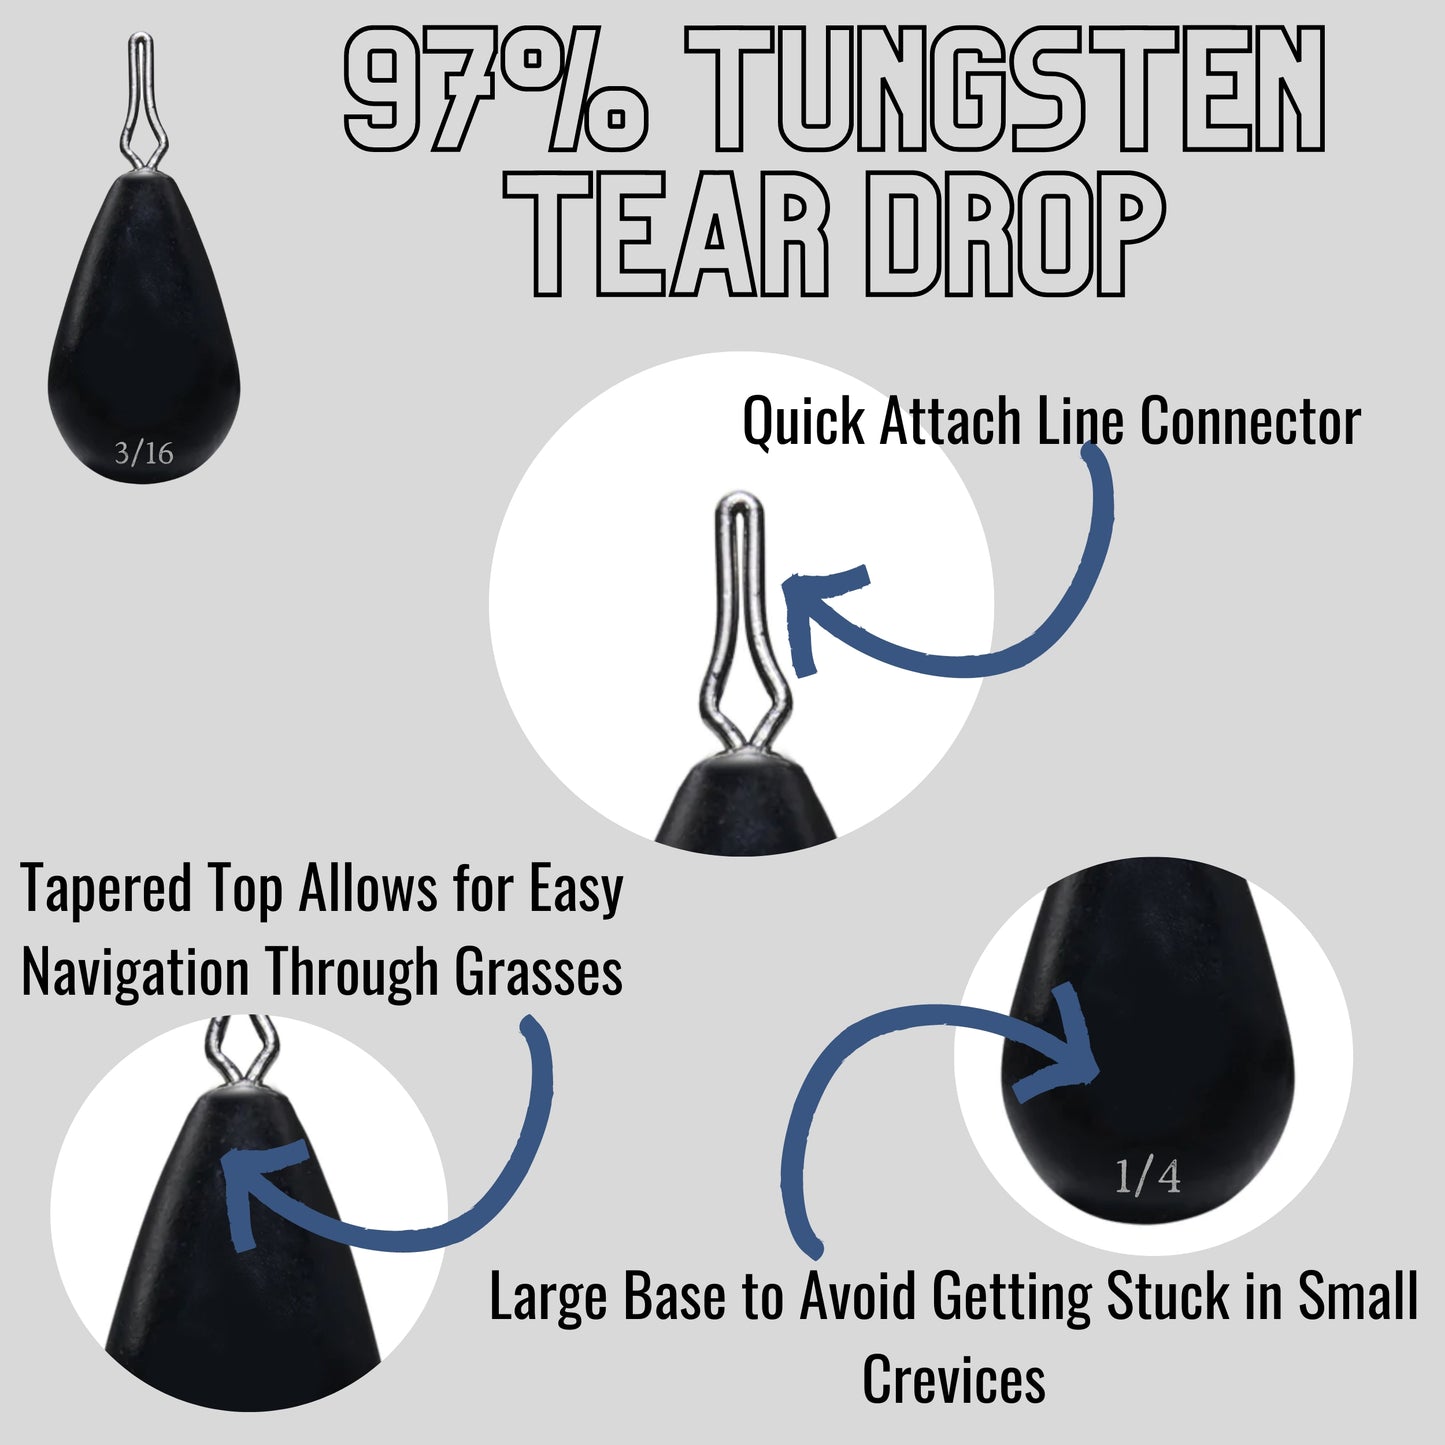 Reaction Tackle Tungsten Drop Shot Weights